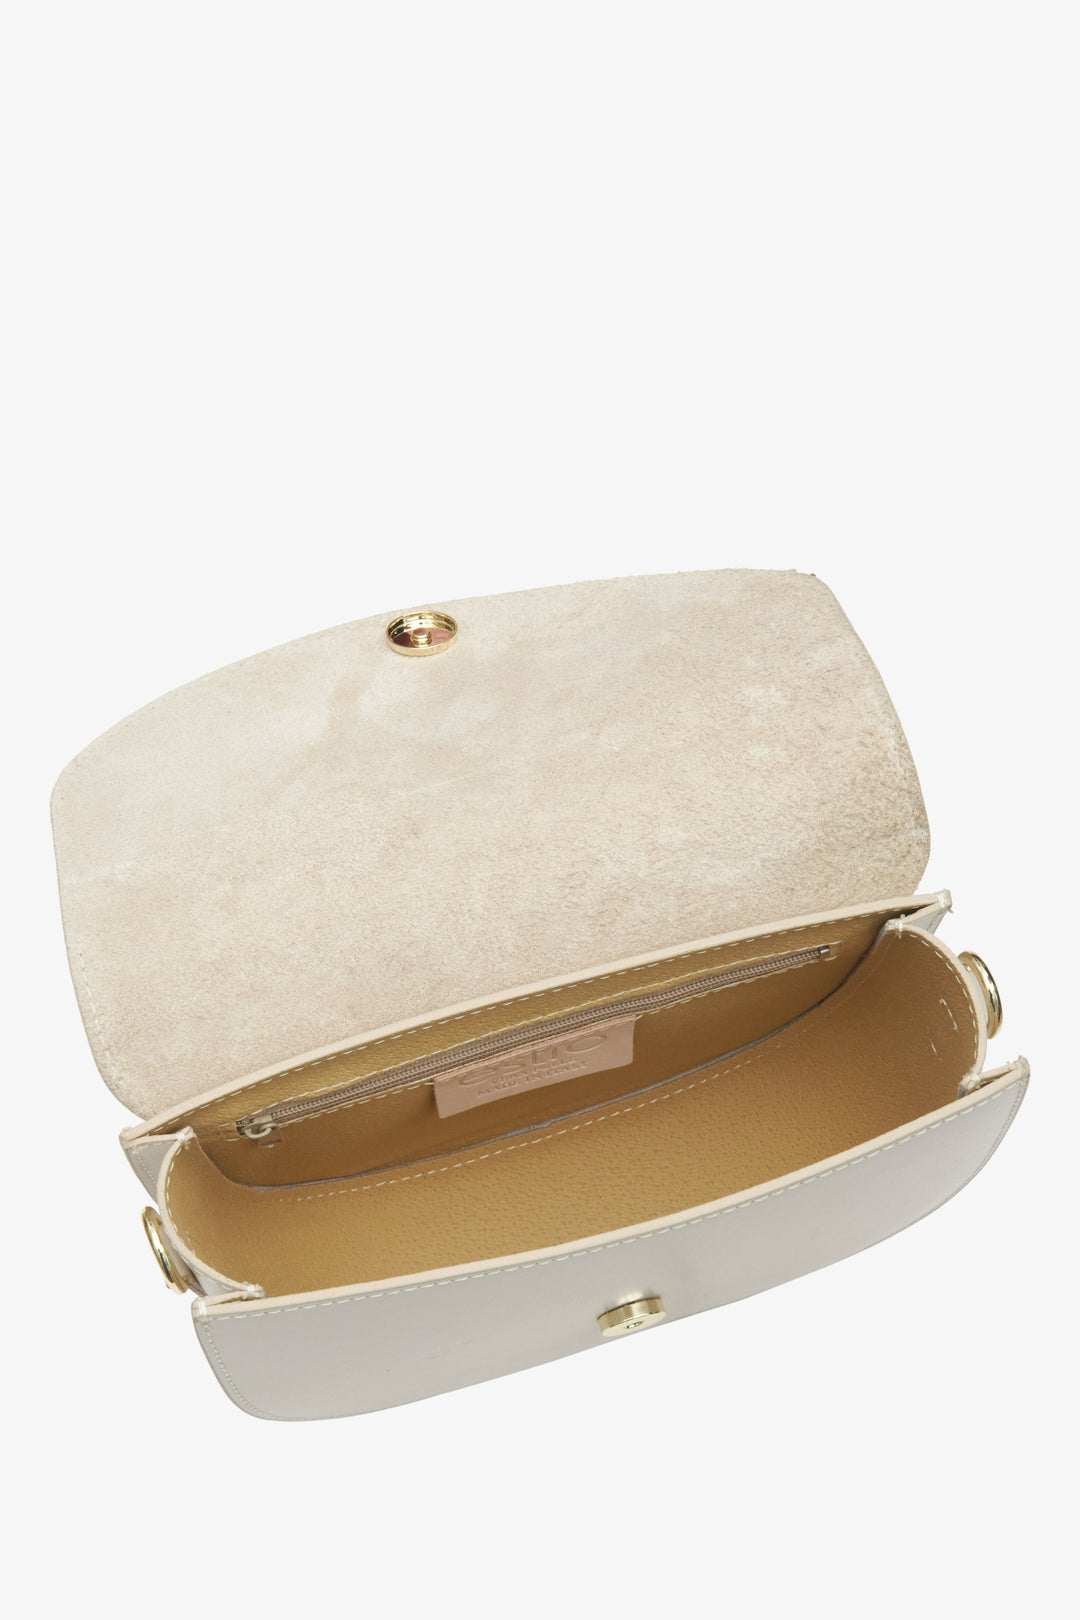 Women's cream beige Estro handbag made of genuine leather - close-up on the interior of the model.